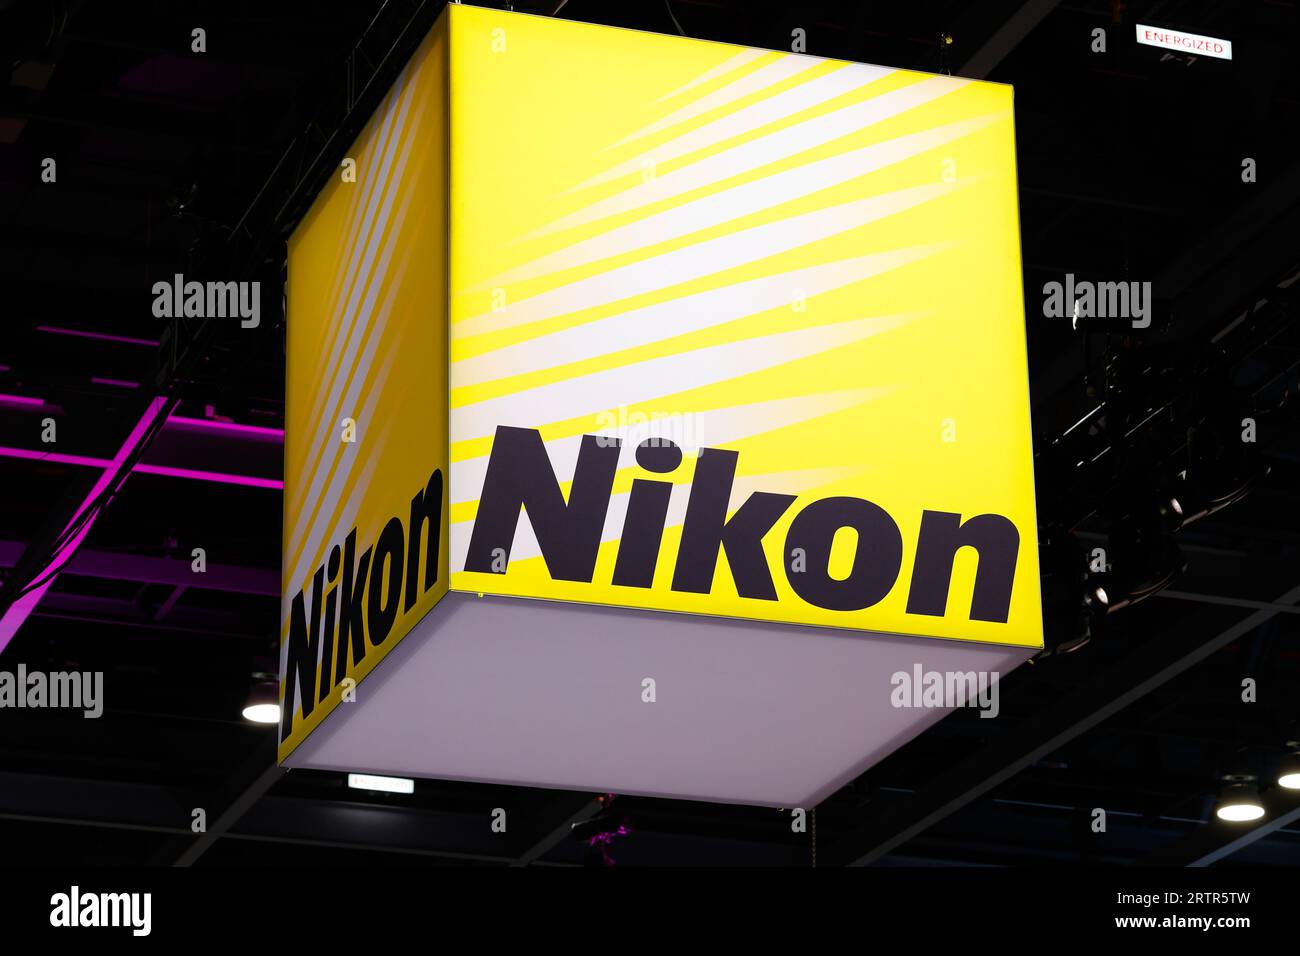 Nikon wayfinding signage at a trade show, exhibition. Stock Photo